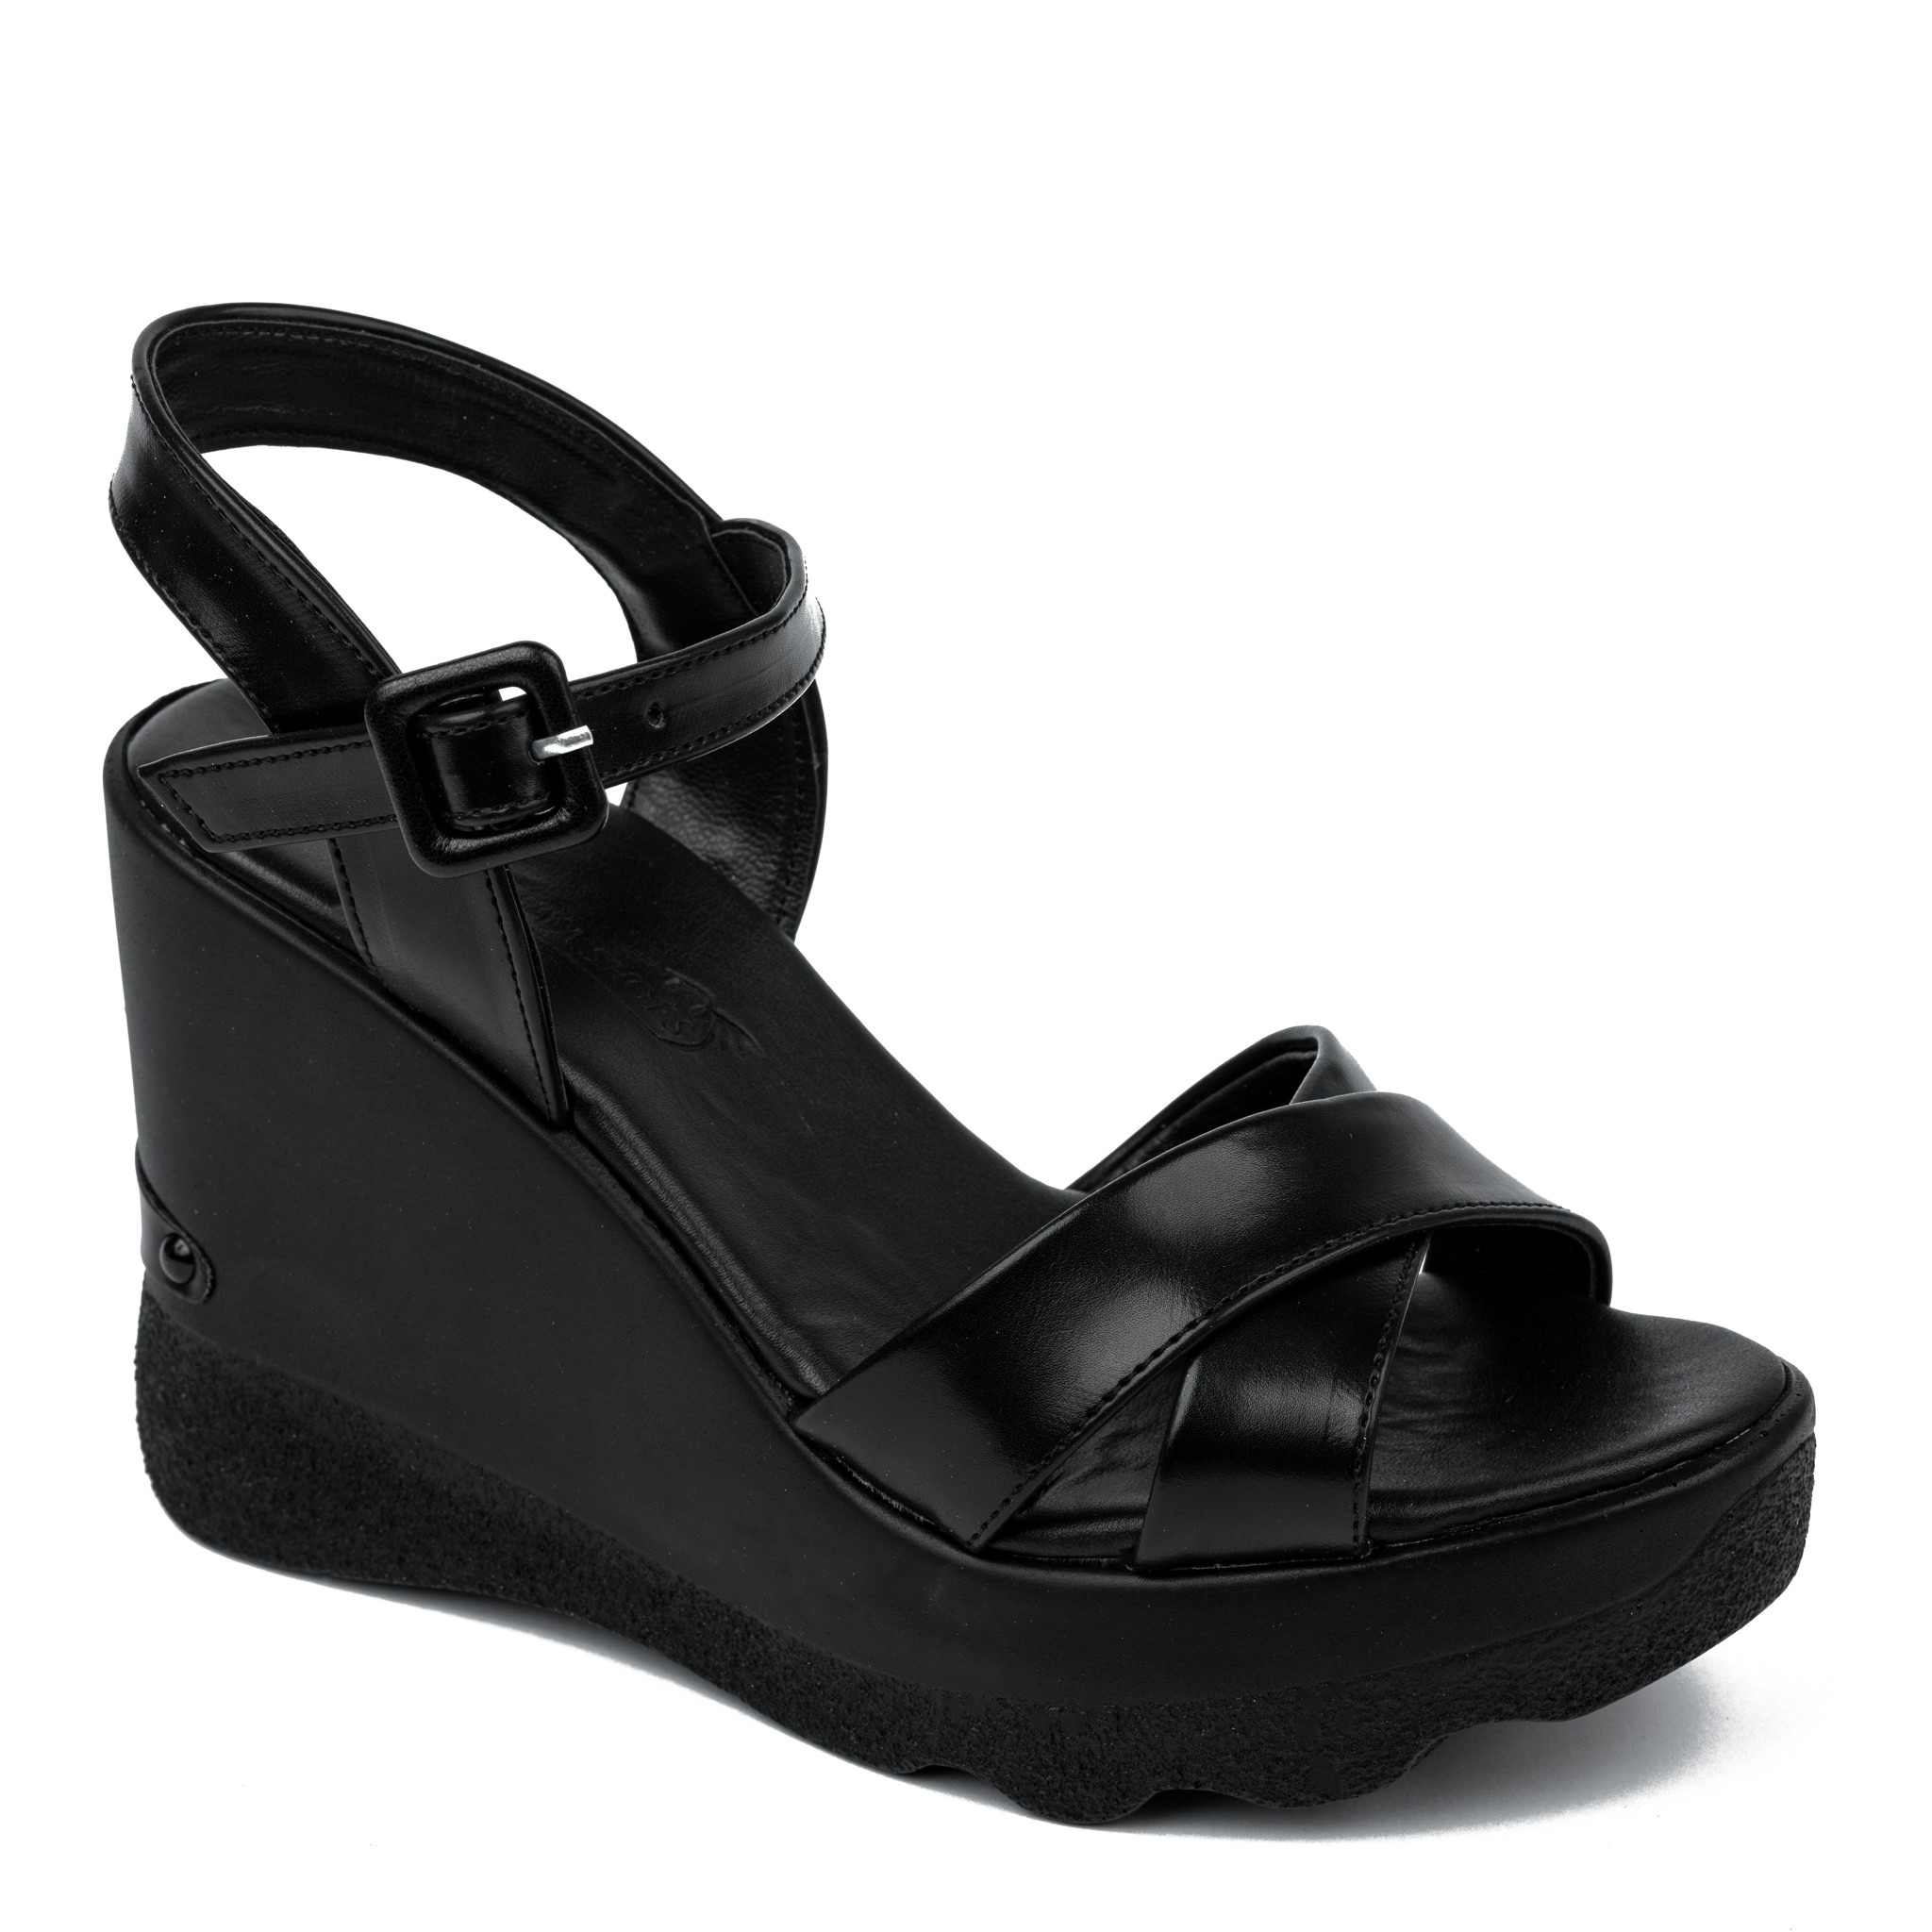 Women sandals A325 - BLACK